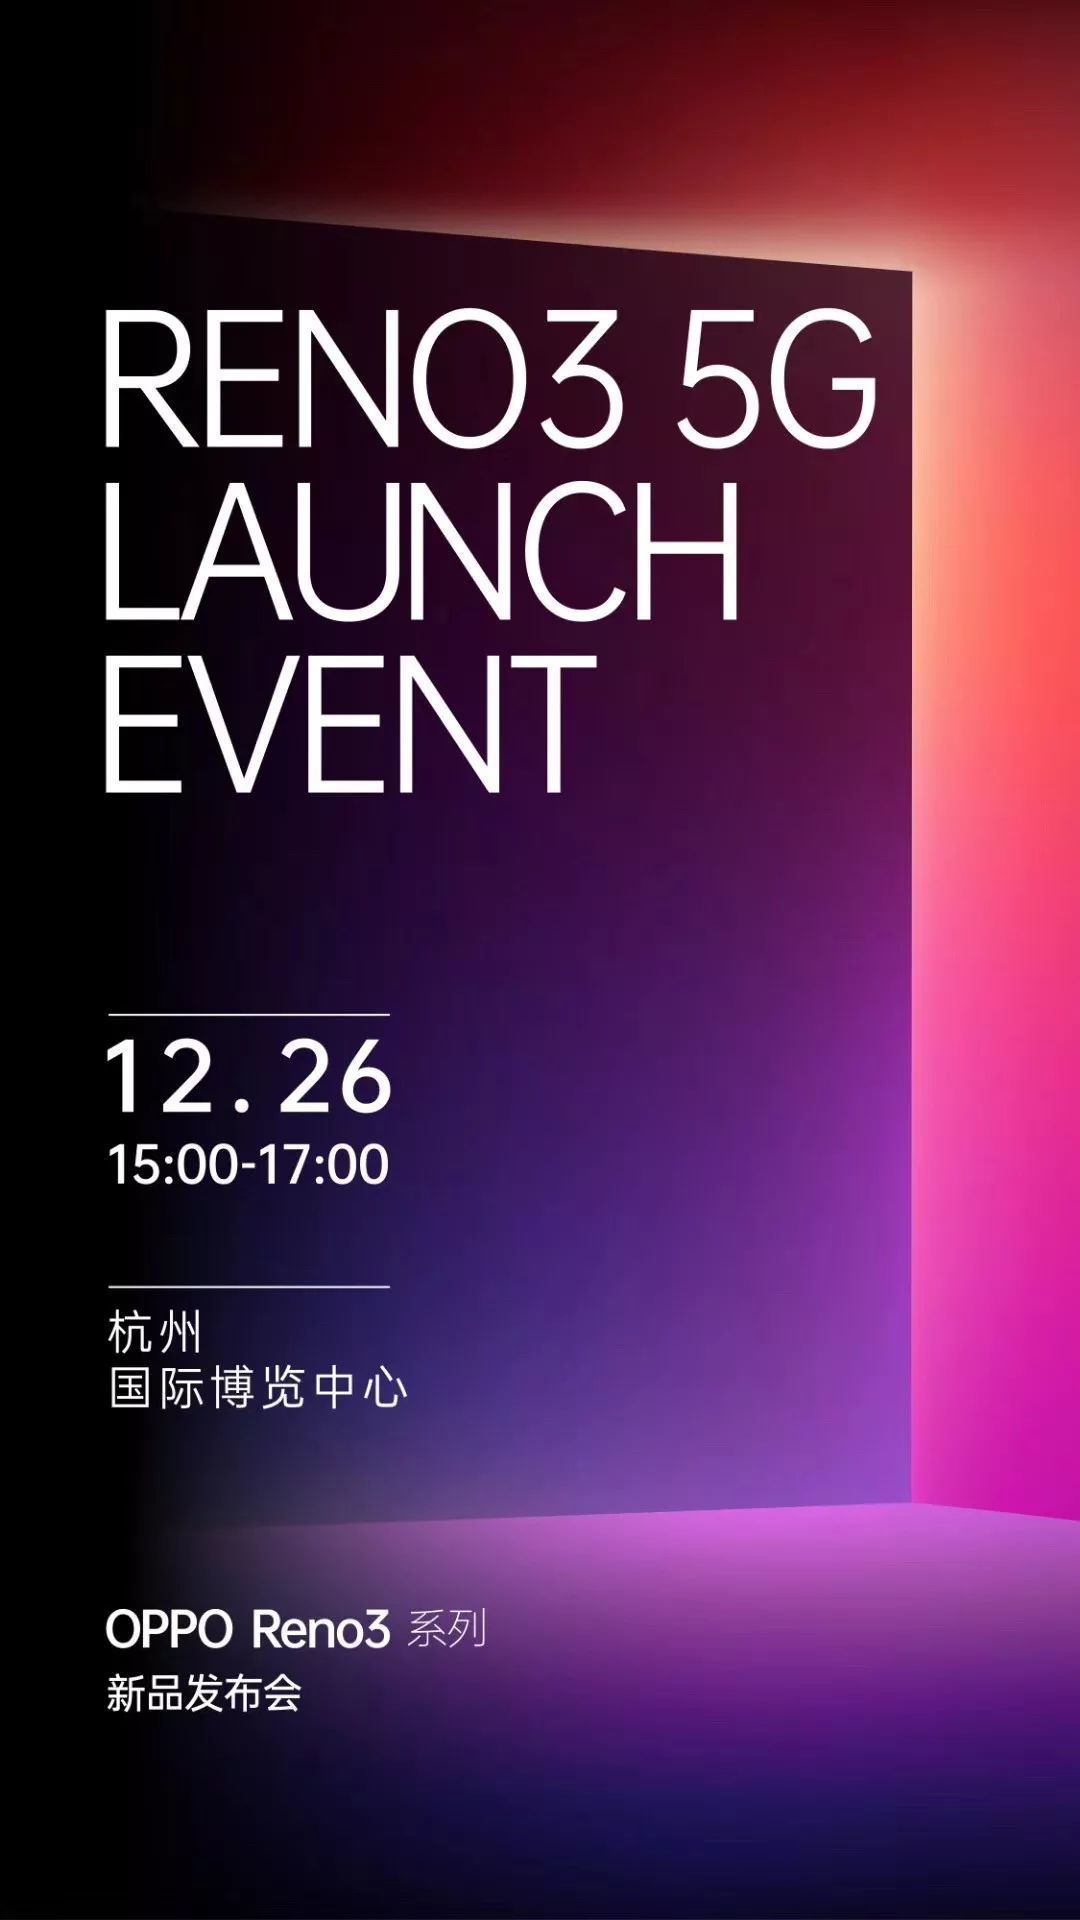 OPPO Reno3 系列手机 12 月 26 日杭州发布，主打轻薄 5G